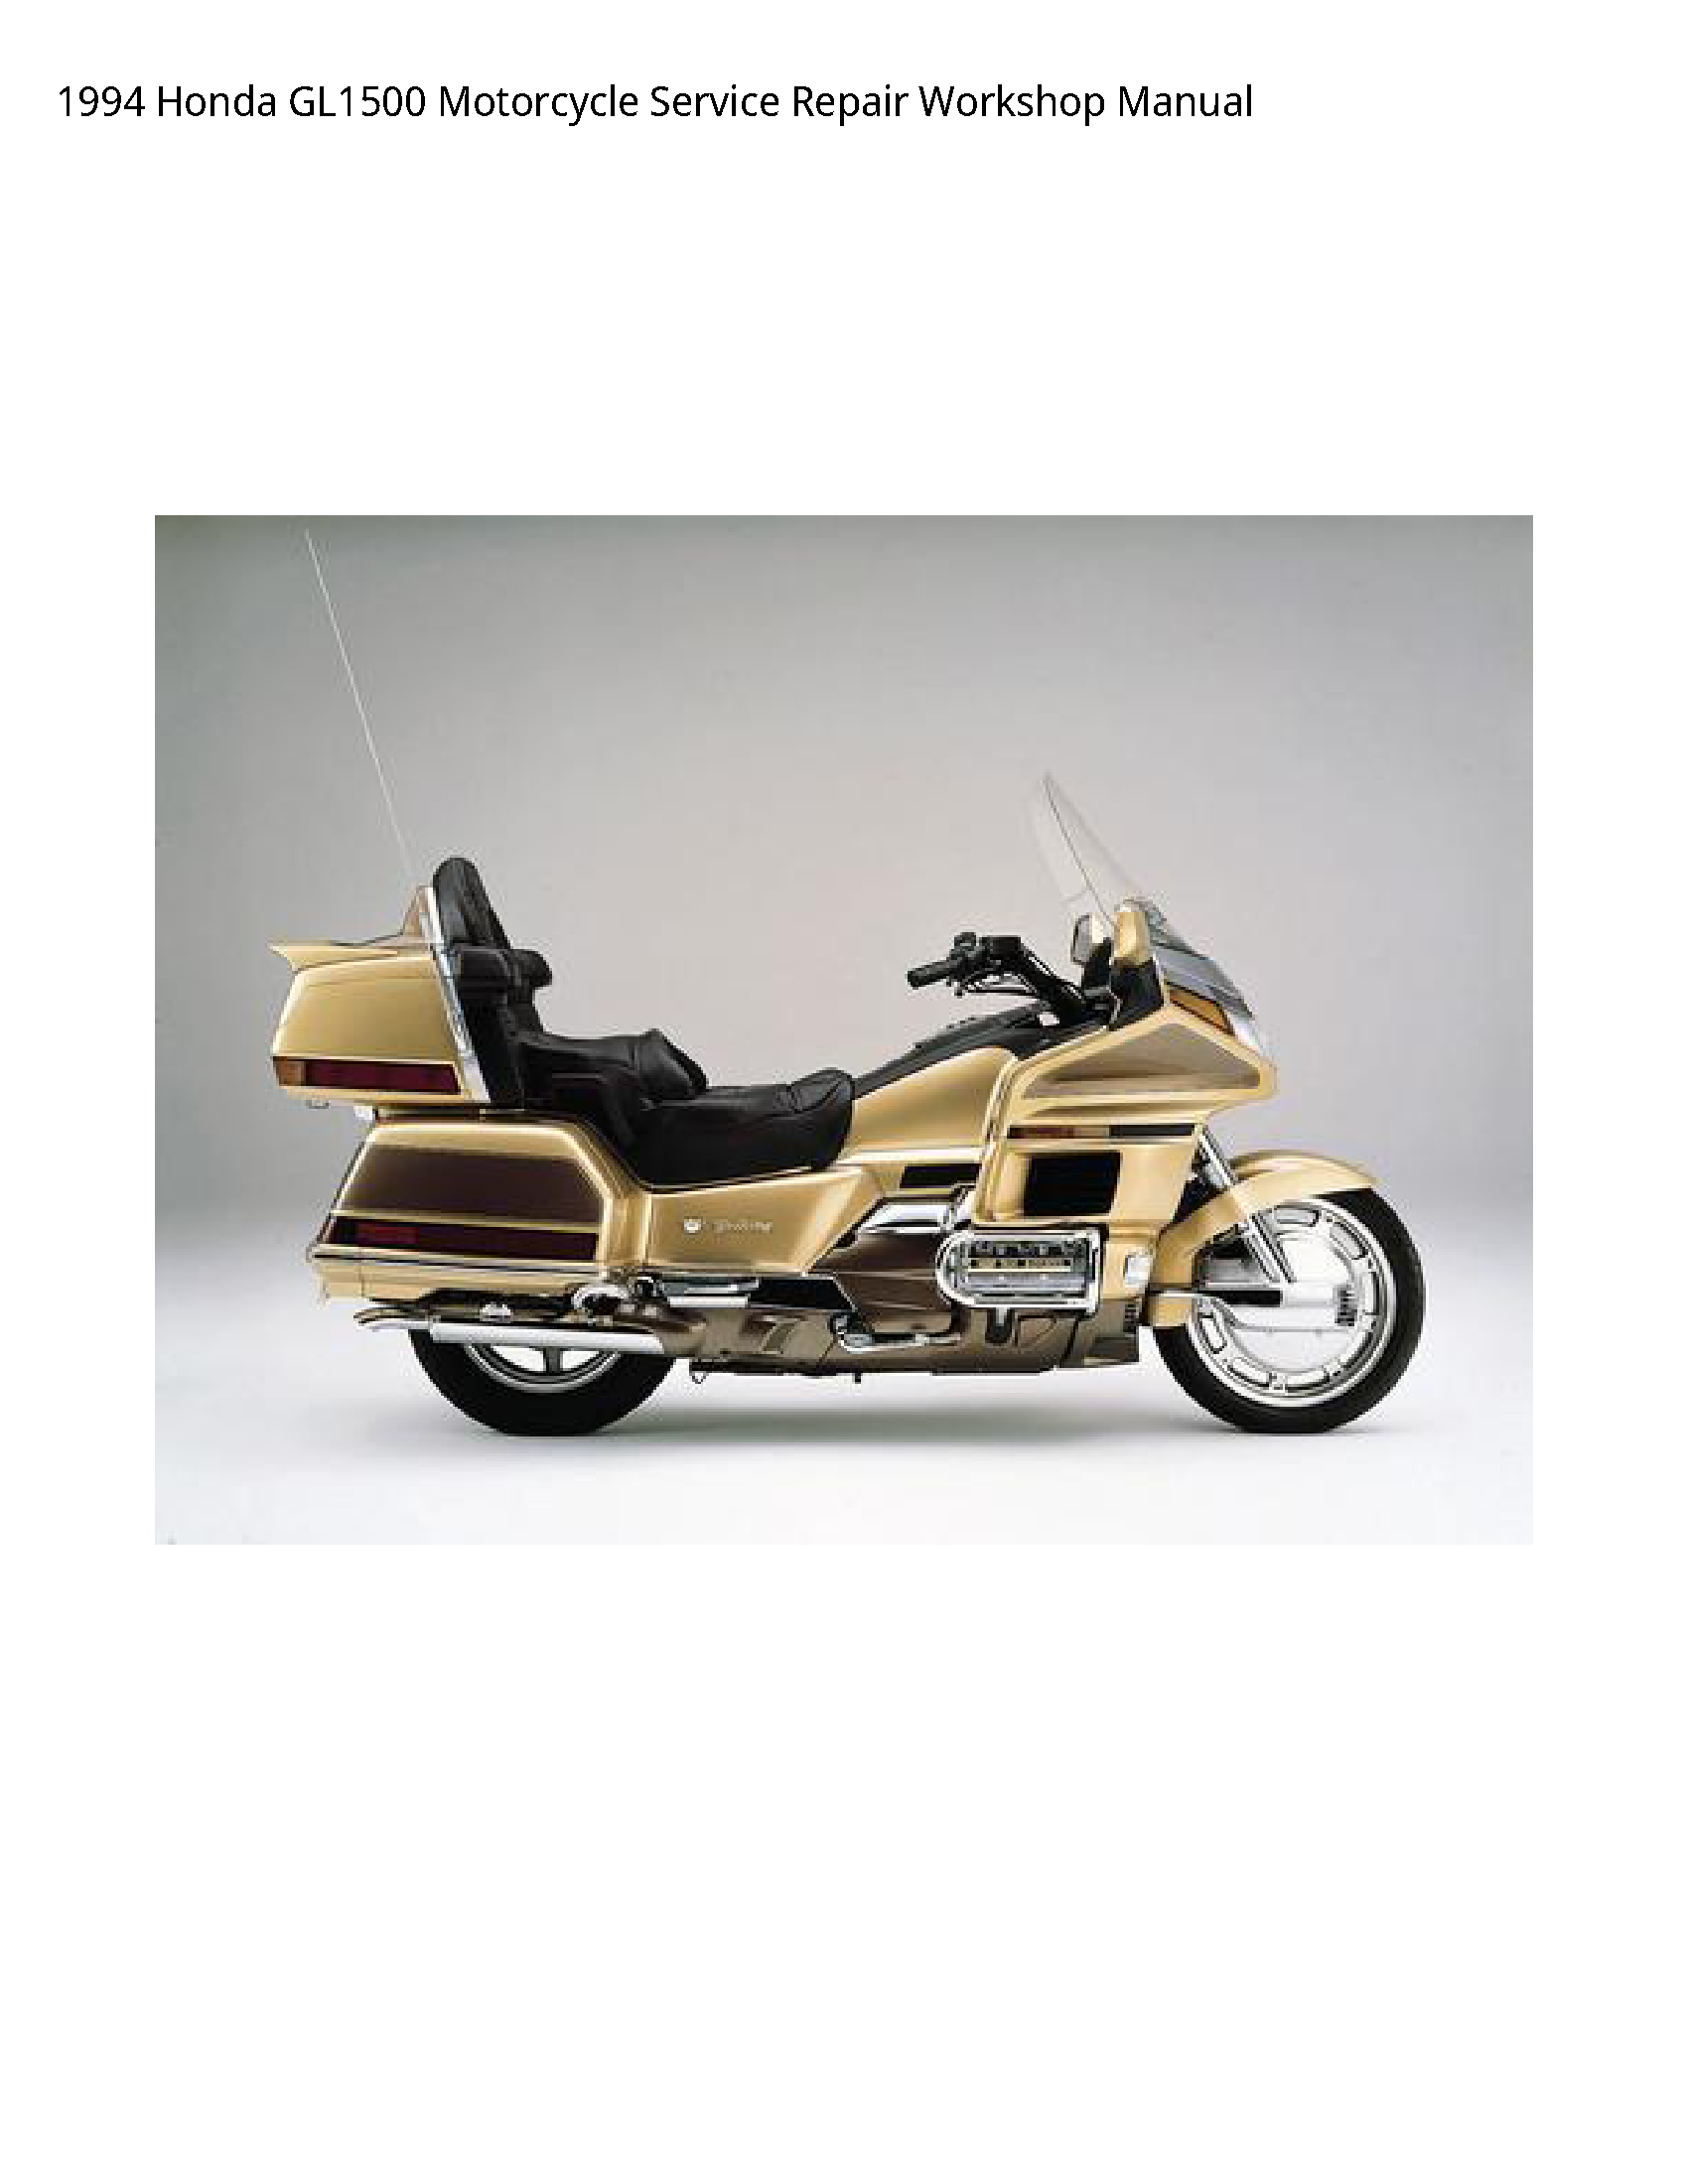 Honda GL1500 Motorcycle manual